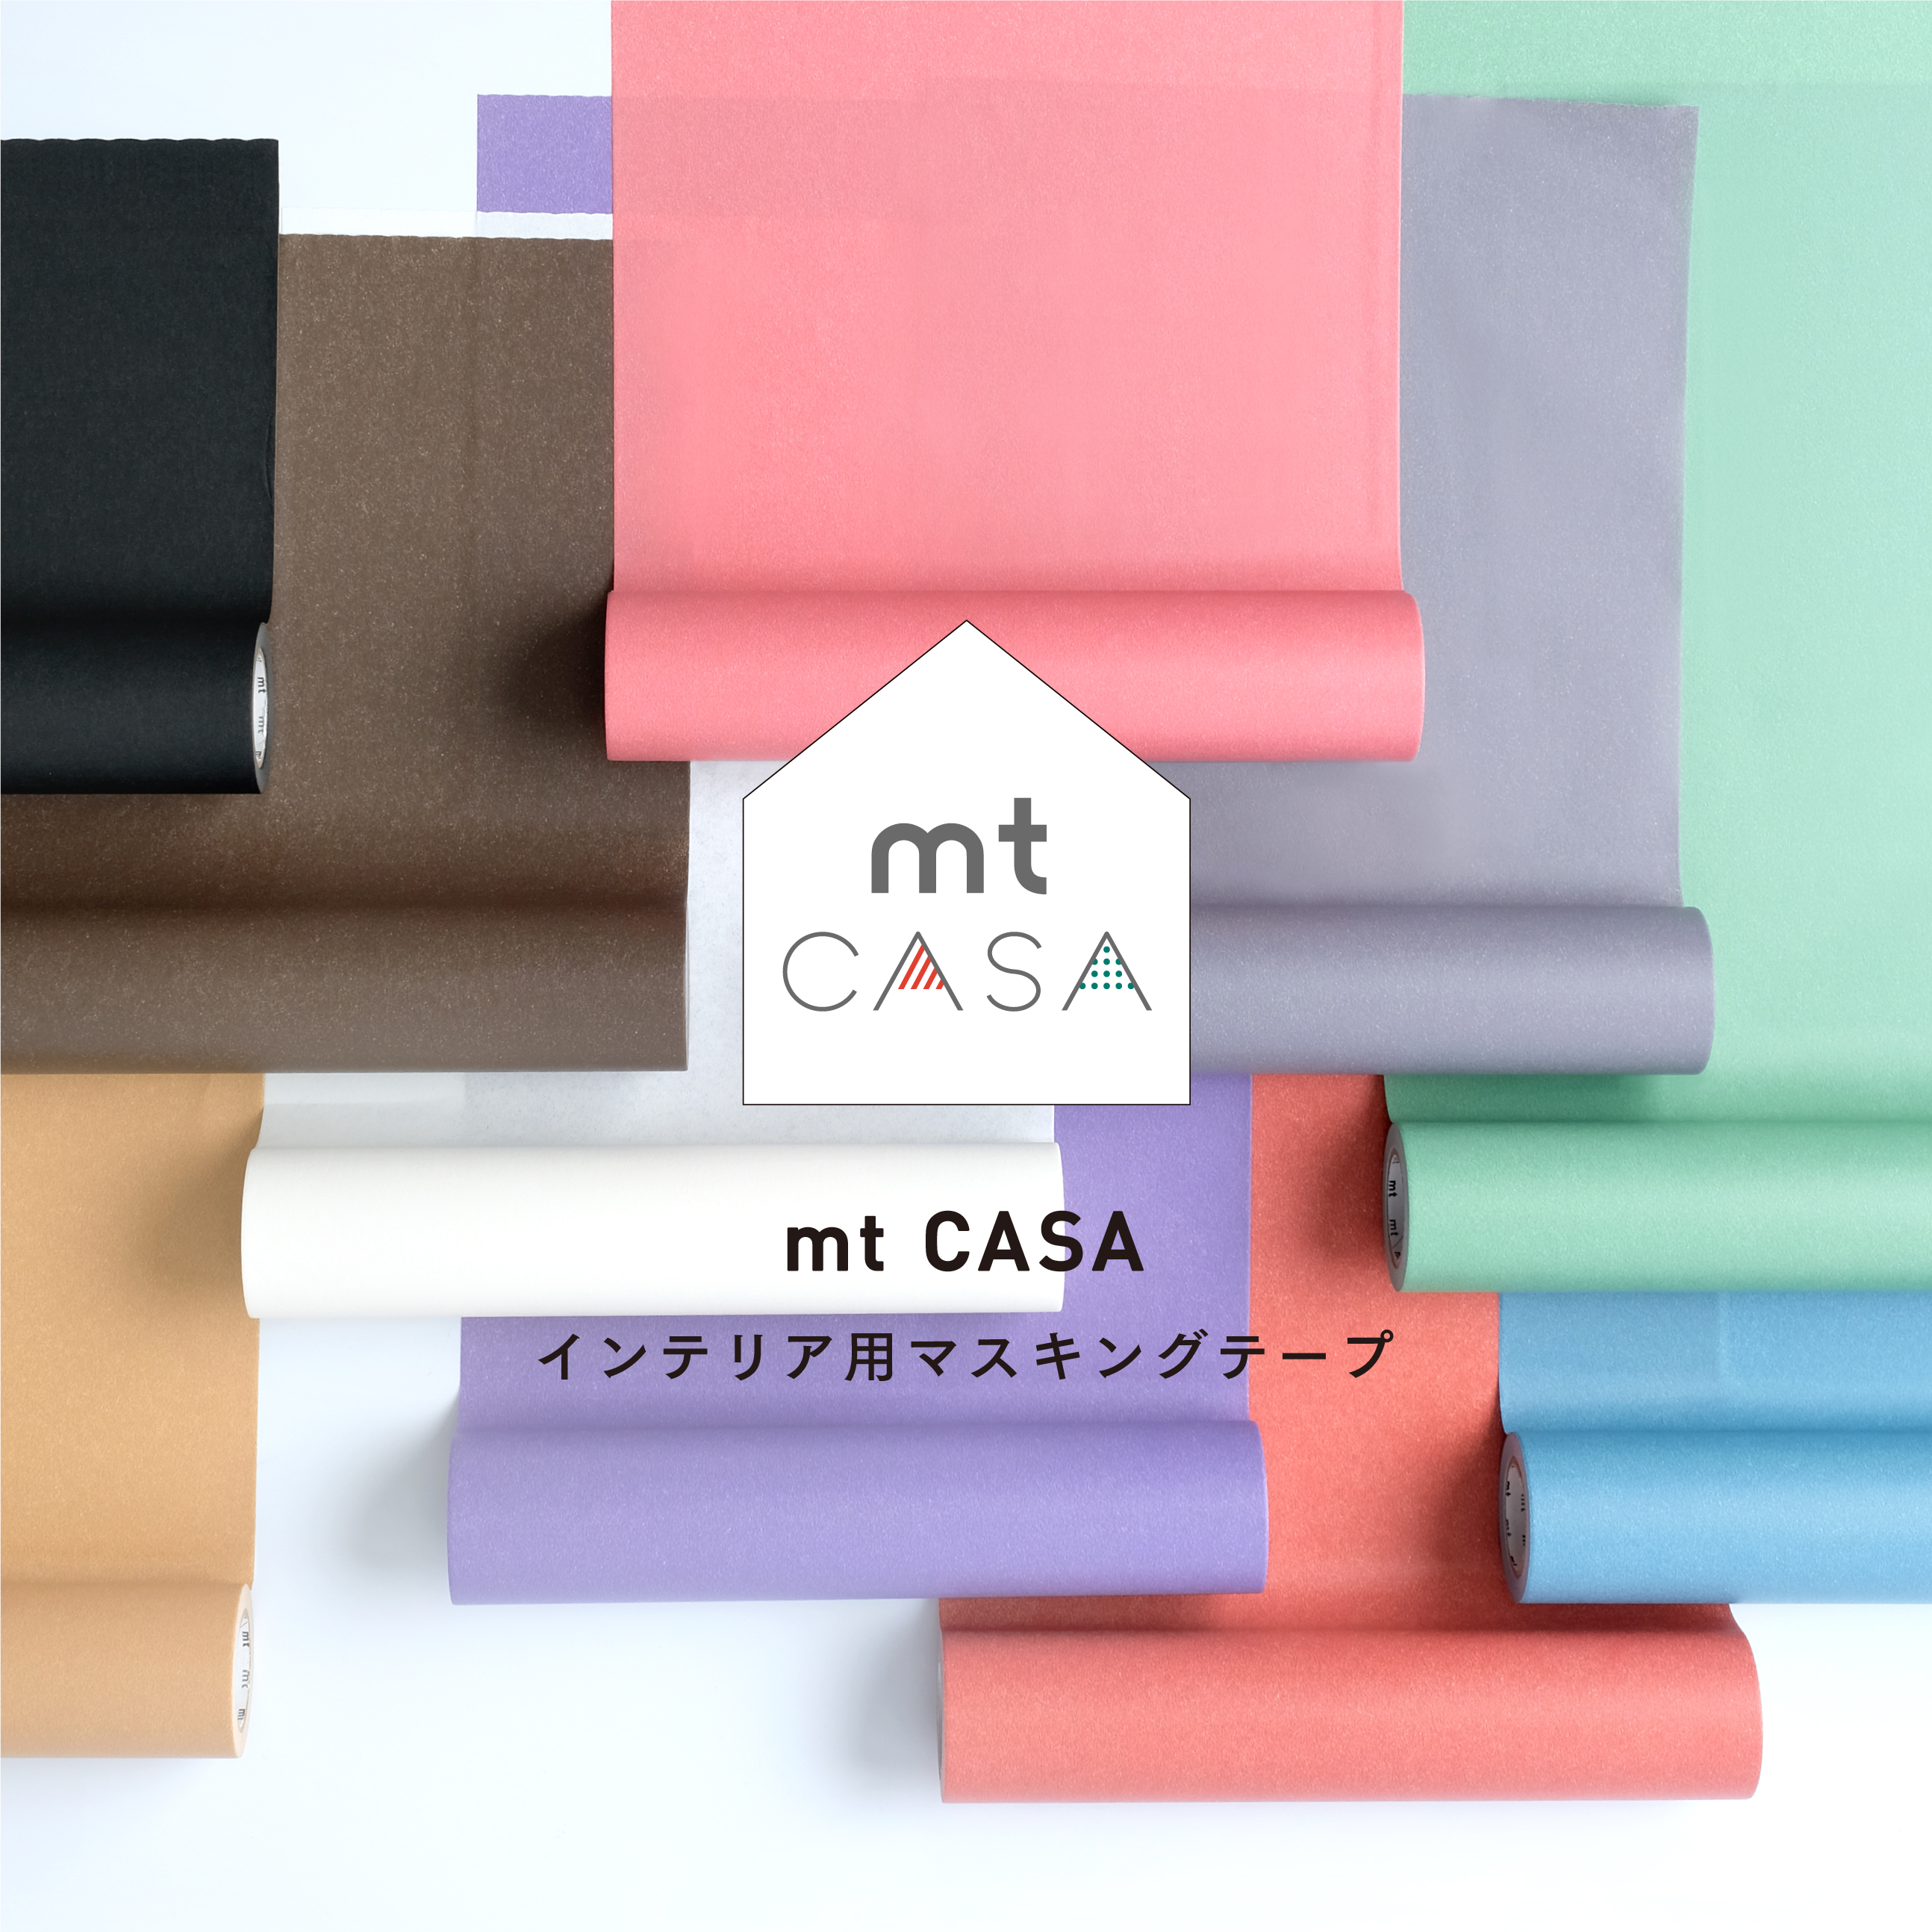 mt CASA | マスキングテープ「mt」- masking tape -